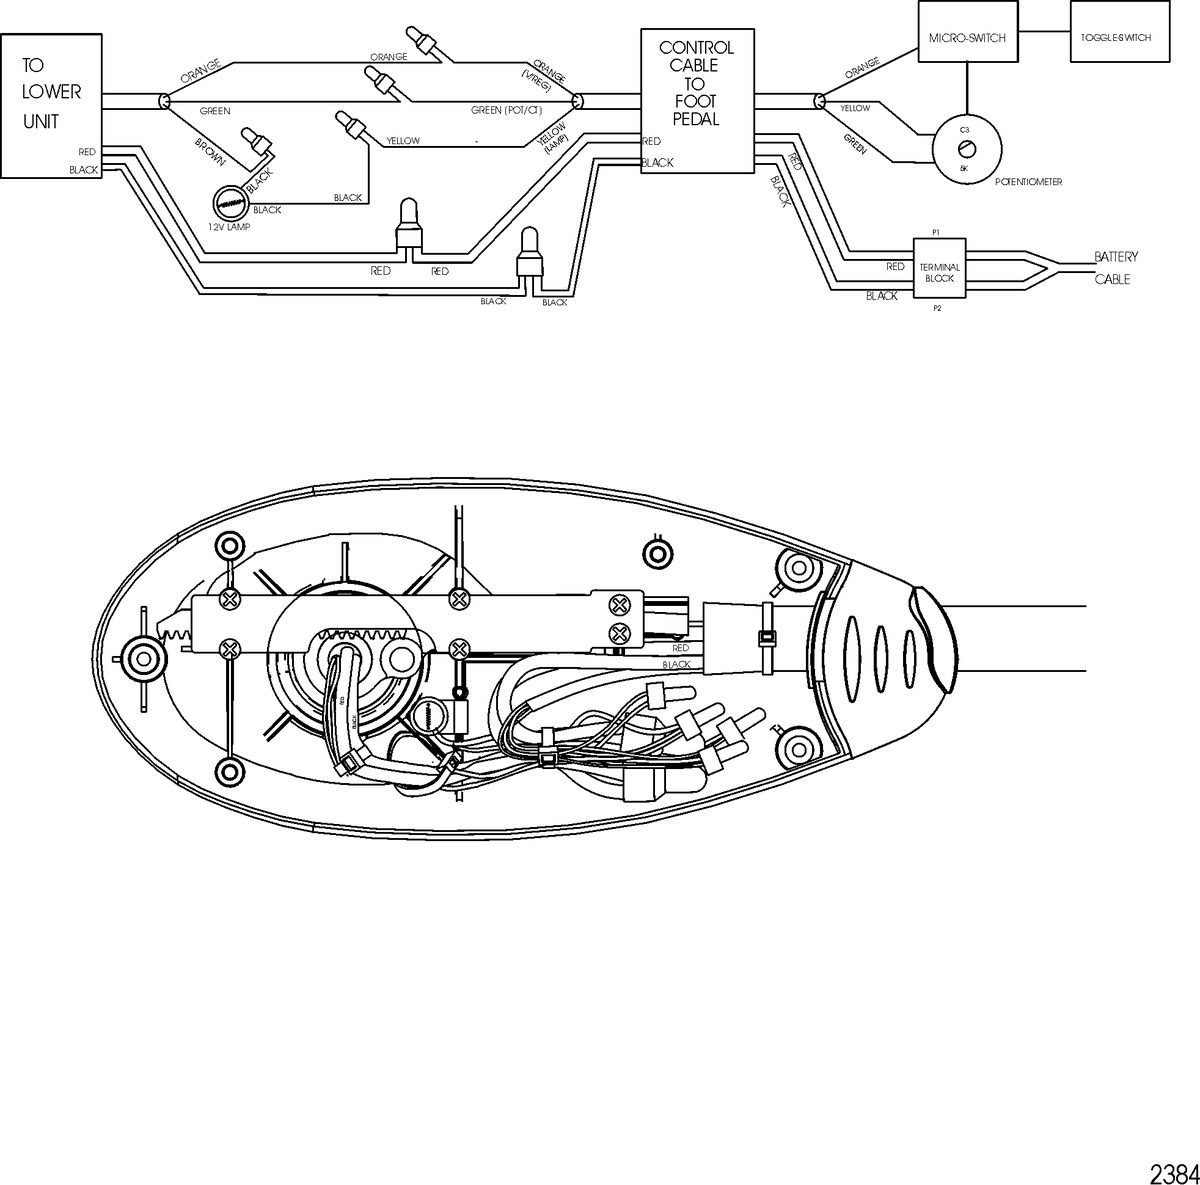 TROLLING MOTOR MOTORGUIDE SALT WATER SERIES Wire Diagram(Model SW71FBD / SW71FBV)